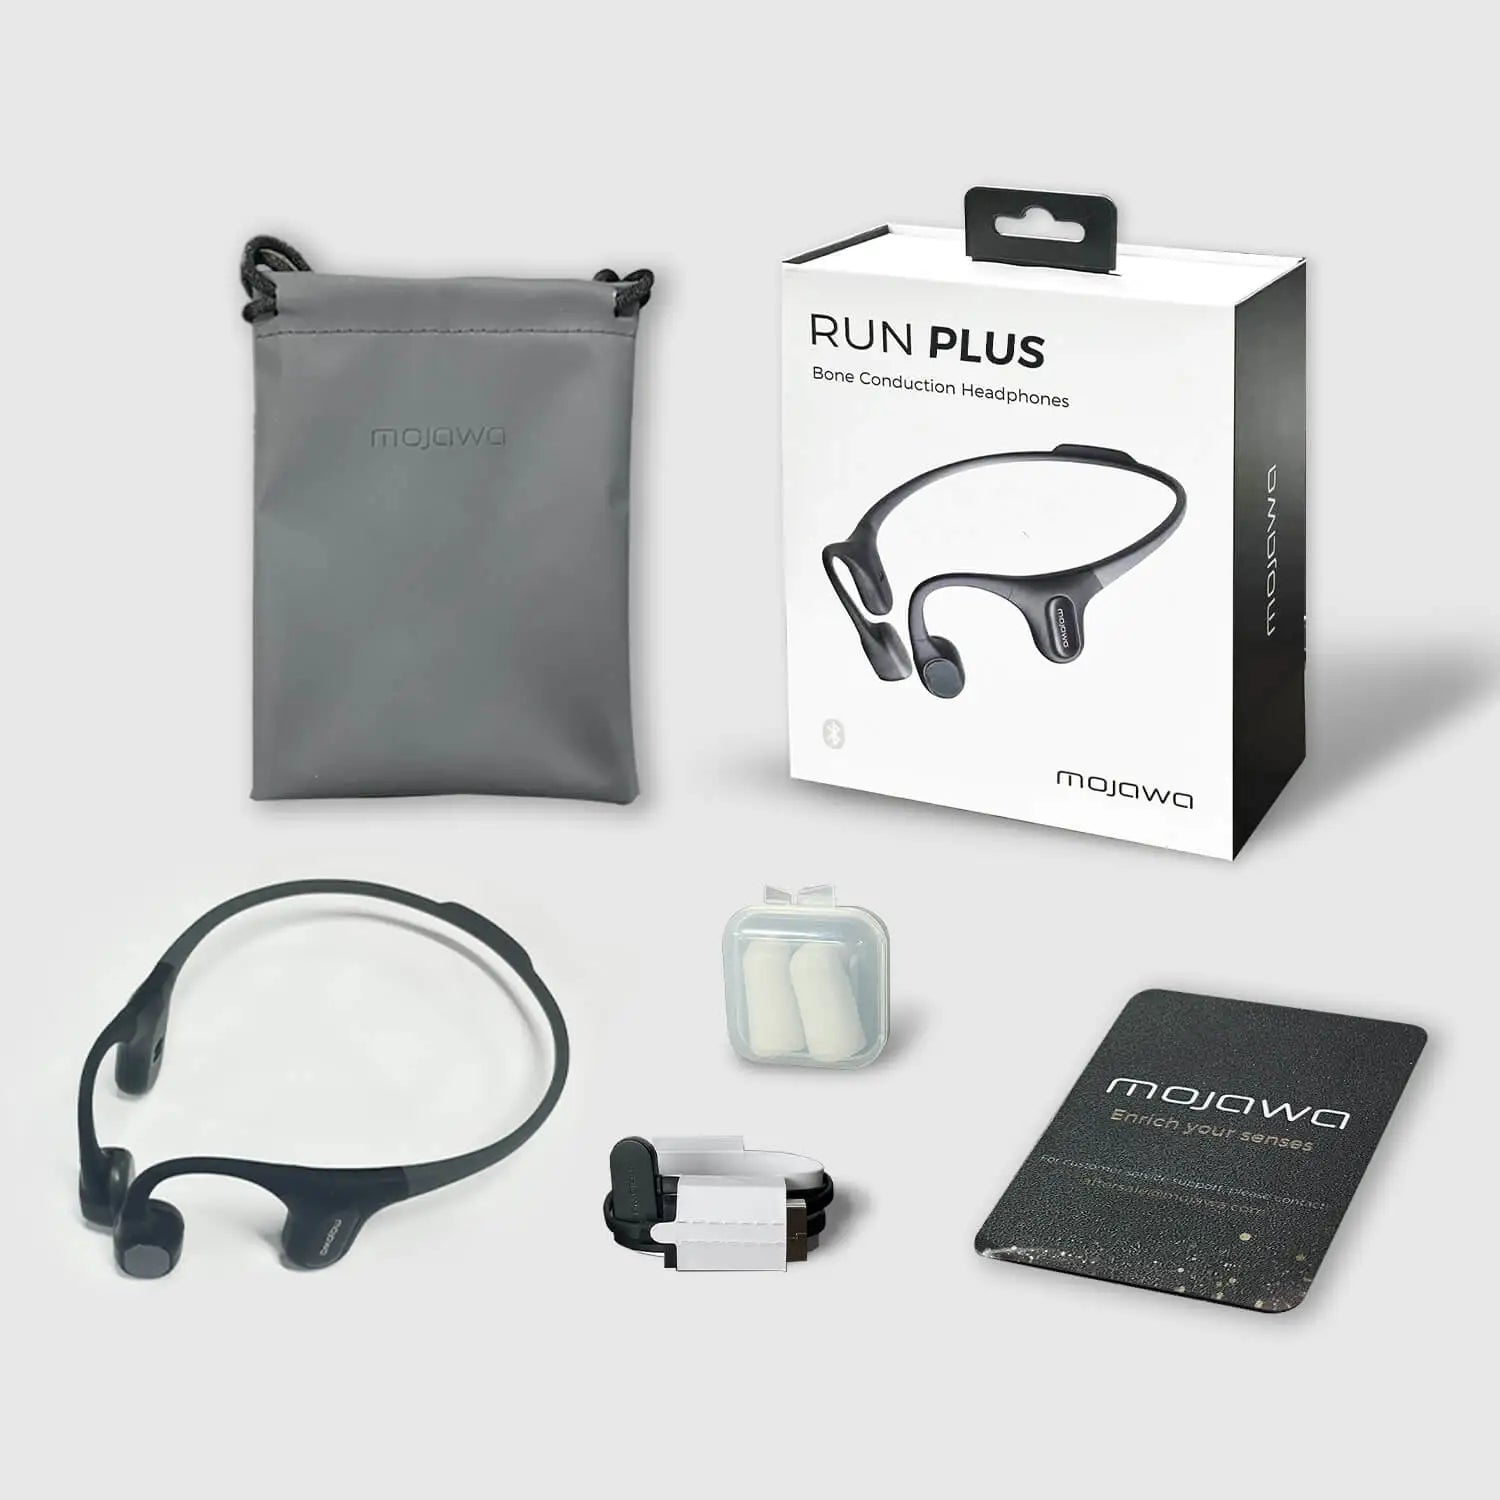 mojawa-runplus-bone-conduction-headphones-packaging-inventory